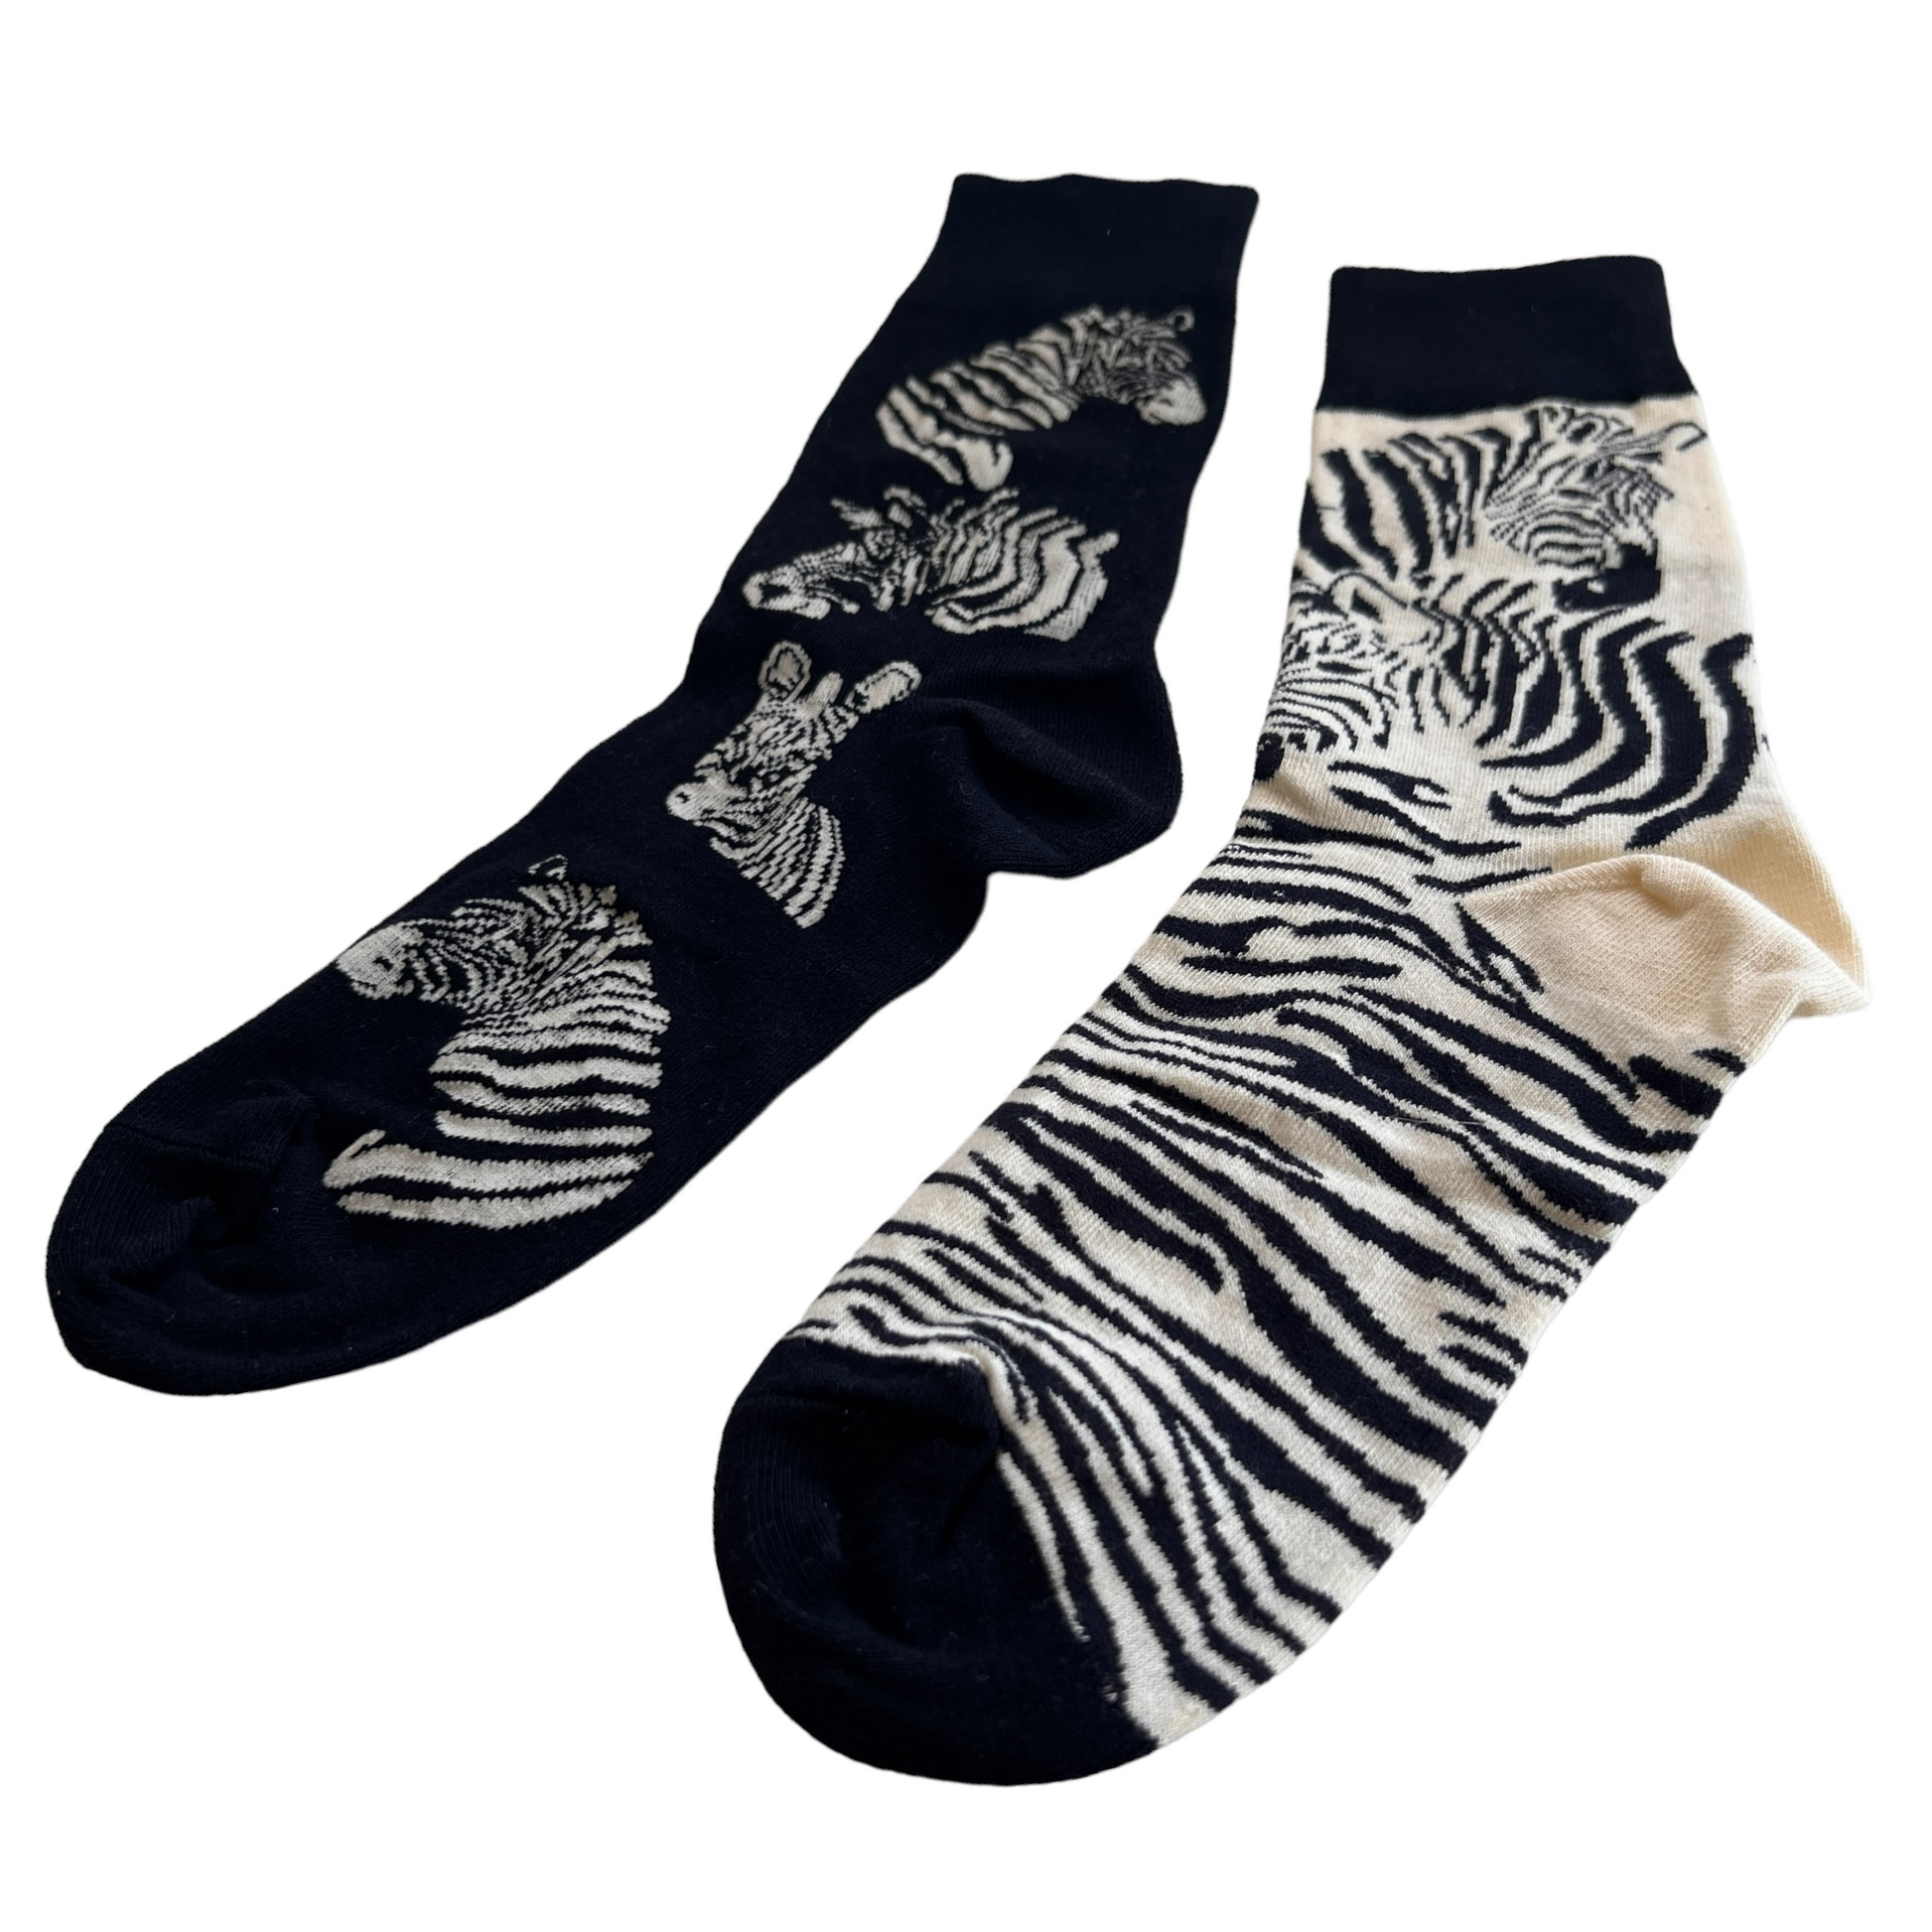 Socks — Zebra  SPIRIT SPARKPLUGS Mismatch  